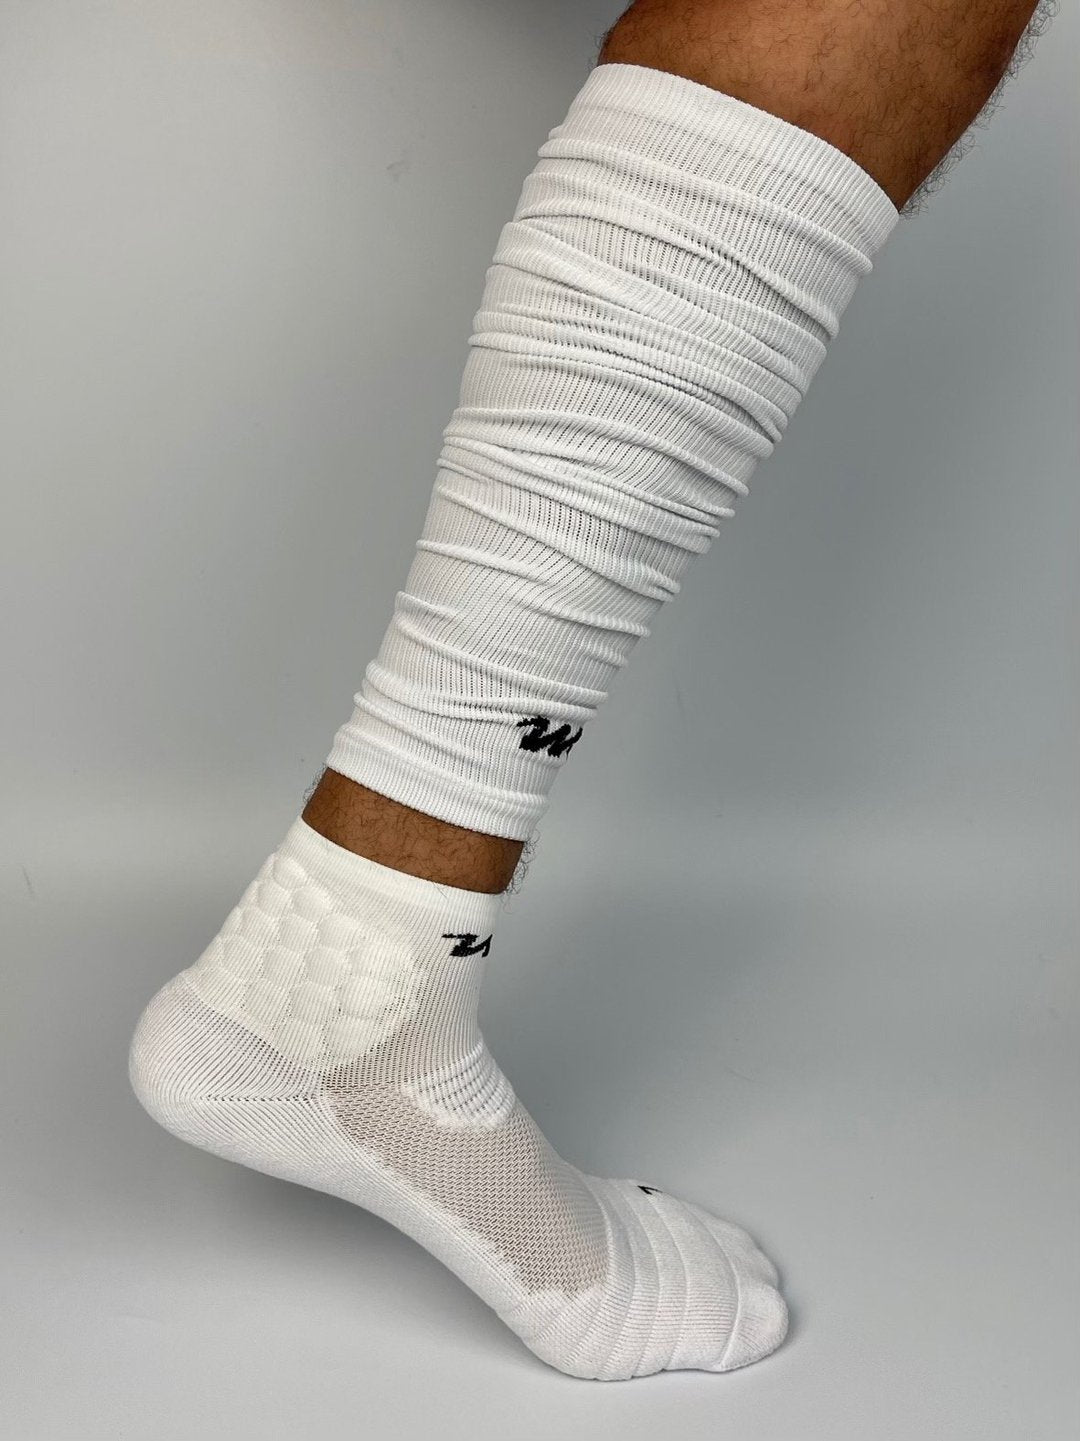 Football Leg Sleeves (White) – Footballism